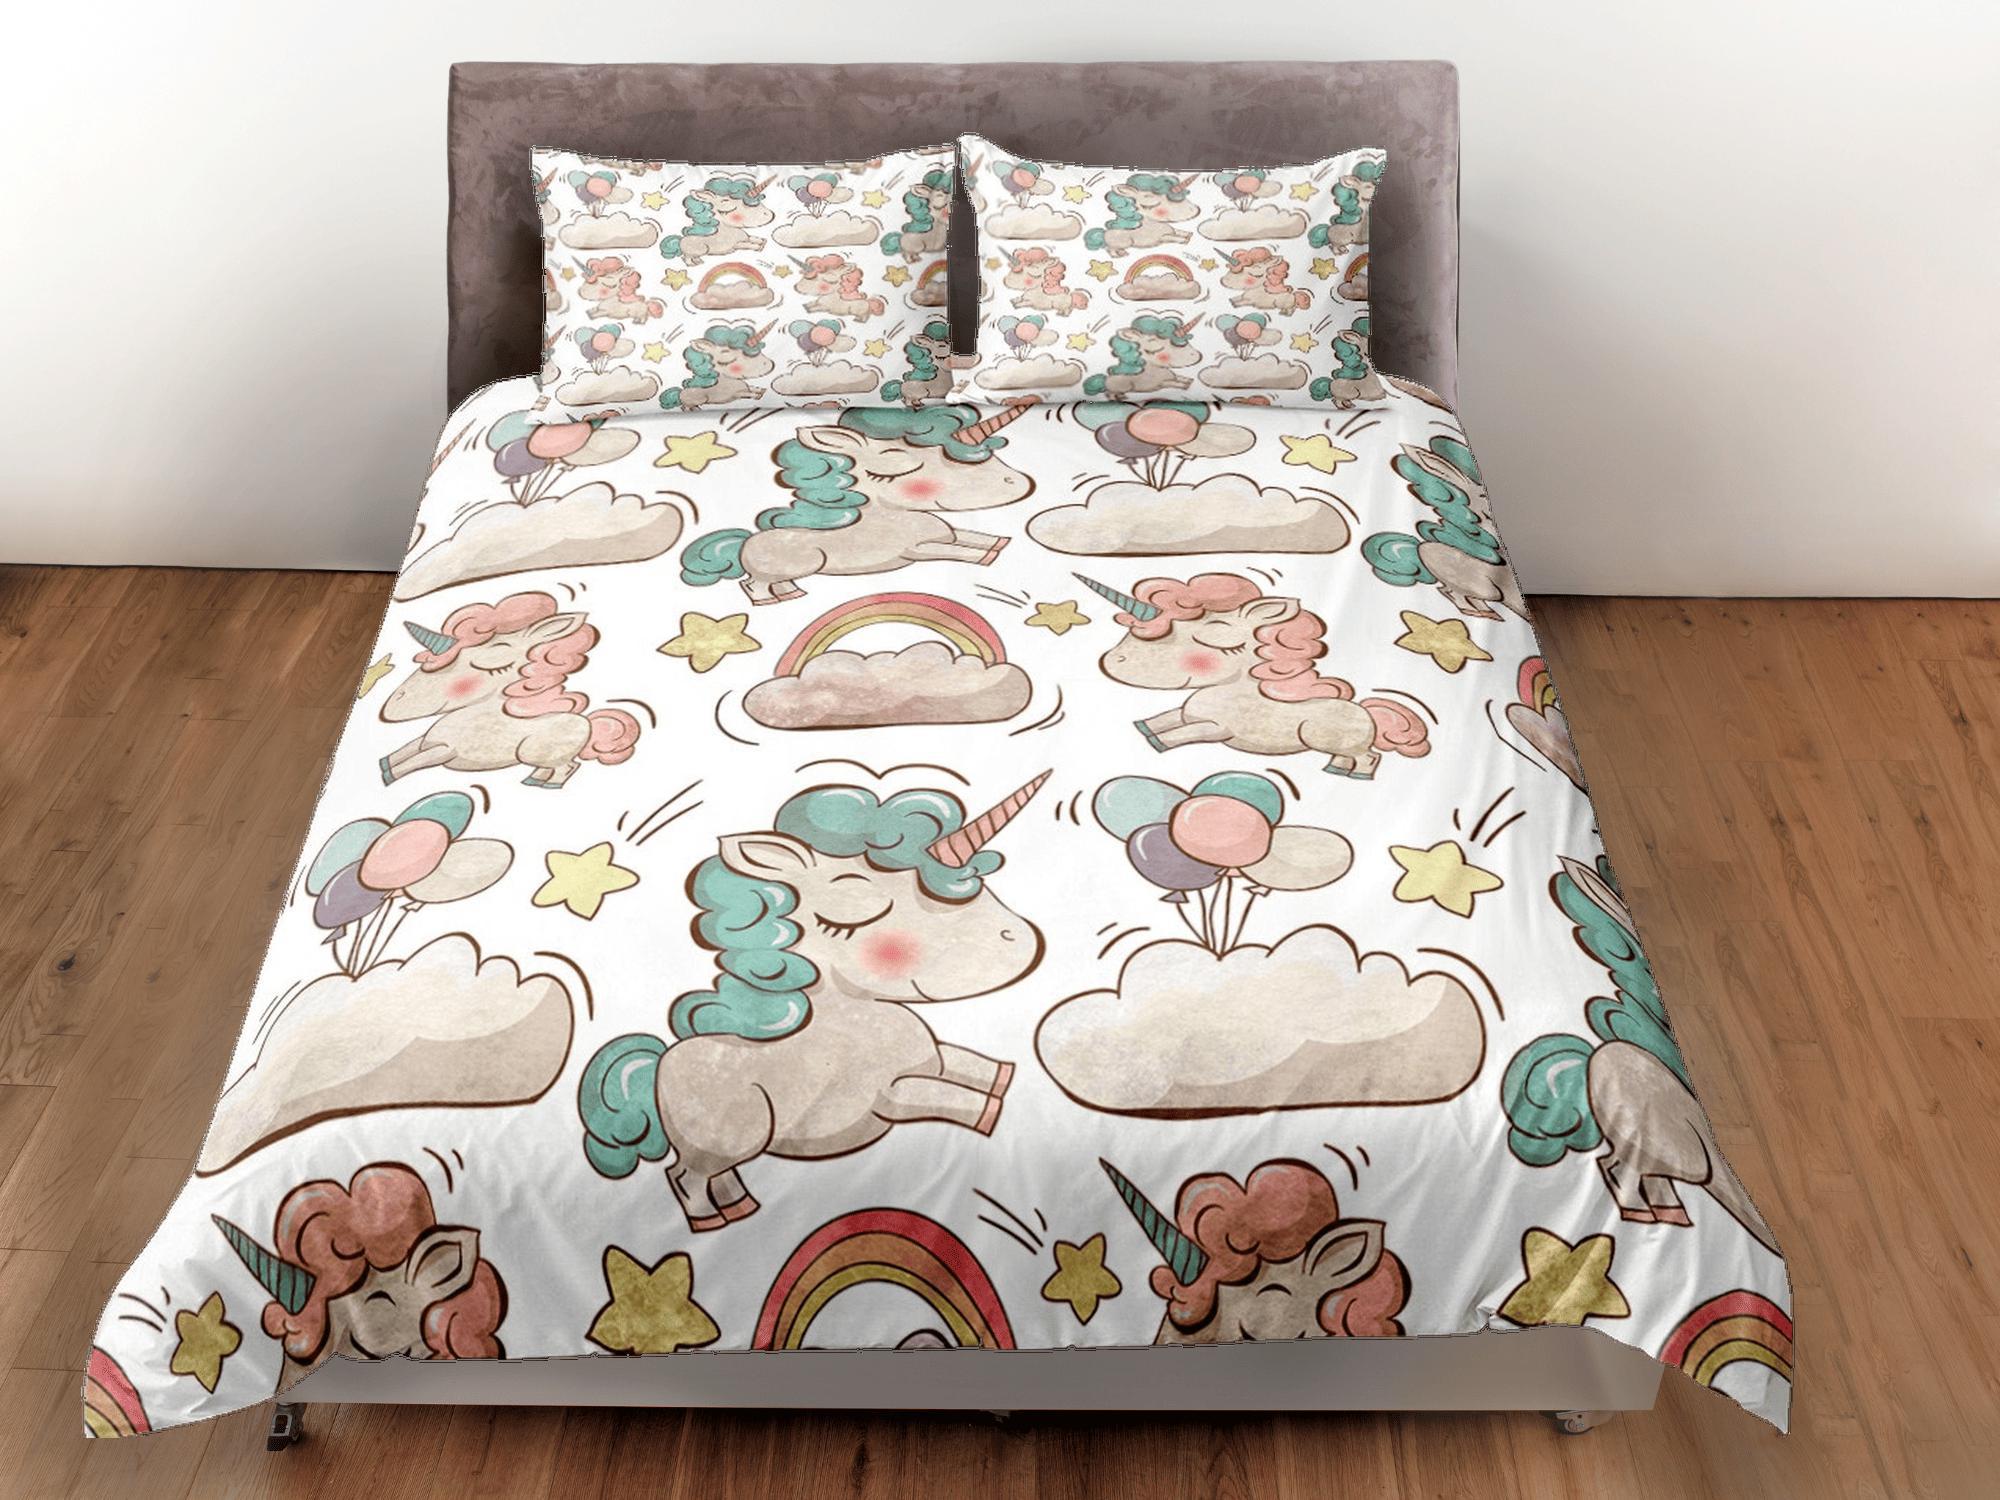 daintyduvet Unicorn White Duvet Cover Set Cute Bedspread, Animal Dorm Bedding with Pillowcase